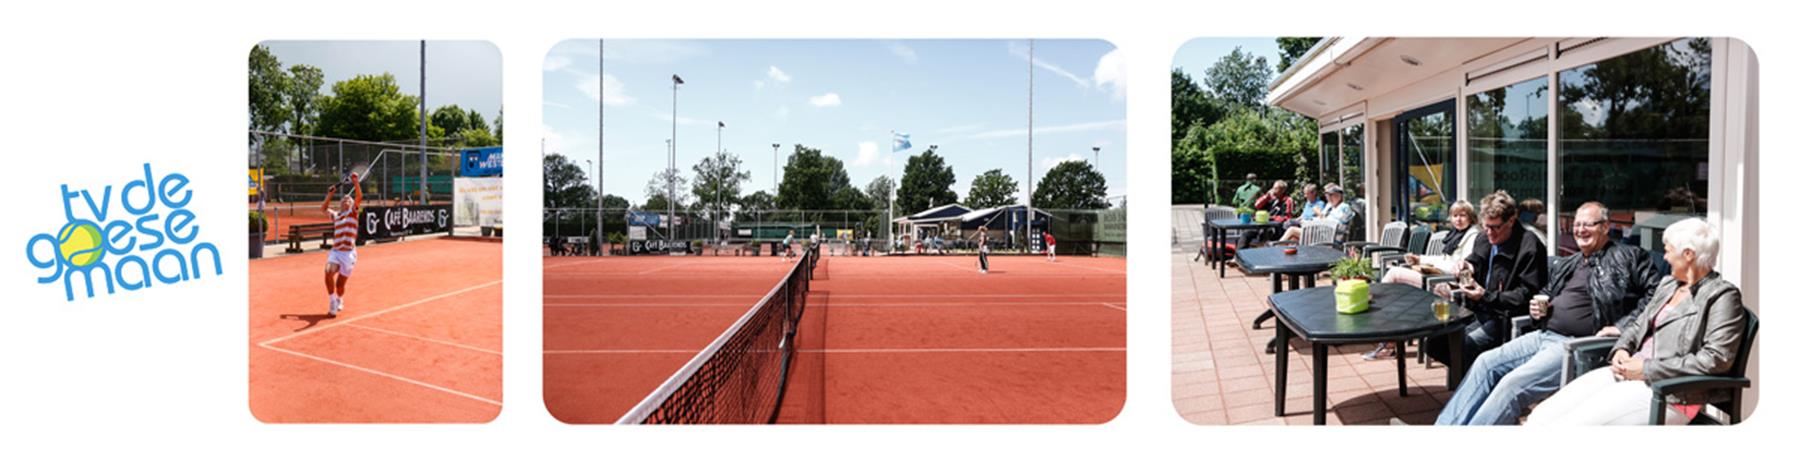 Profile image of venue Tennisvereniging De Goese Maan